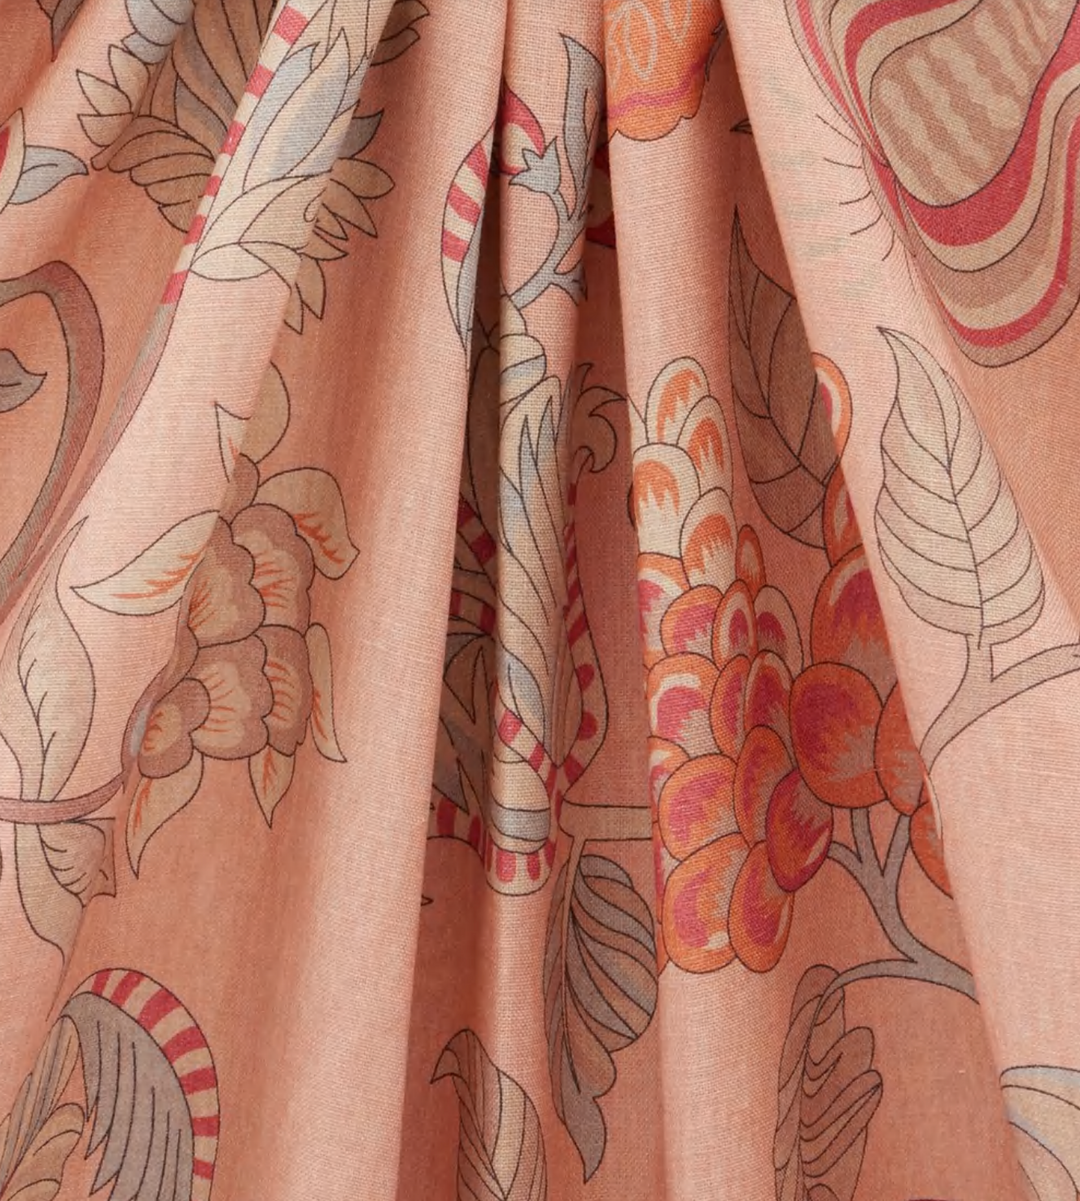 liberty-fabrics-interior-linen-palampore-floral-motif-trail-landsdowne-linen-pink-teal-blue-navy-orange-coral